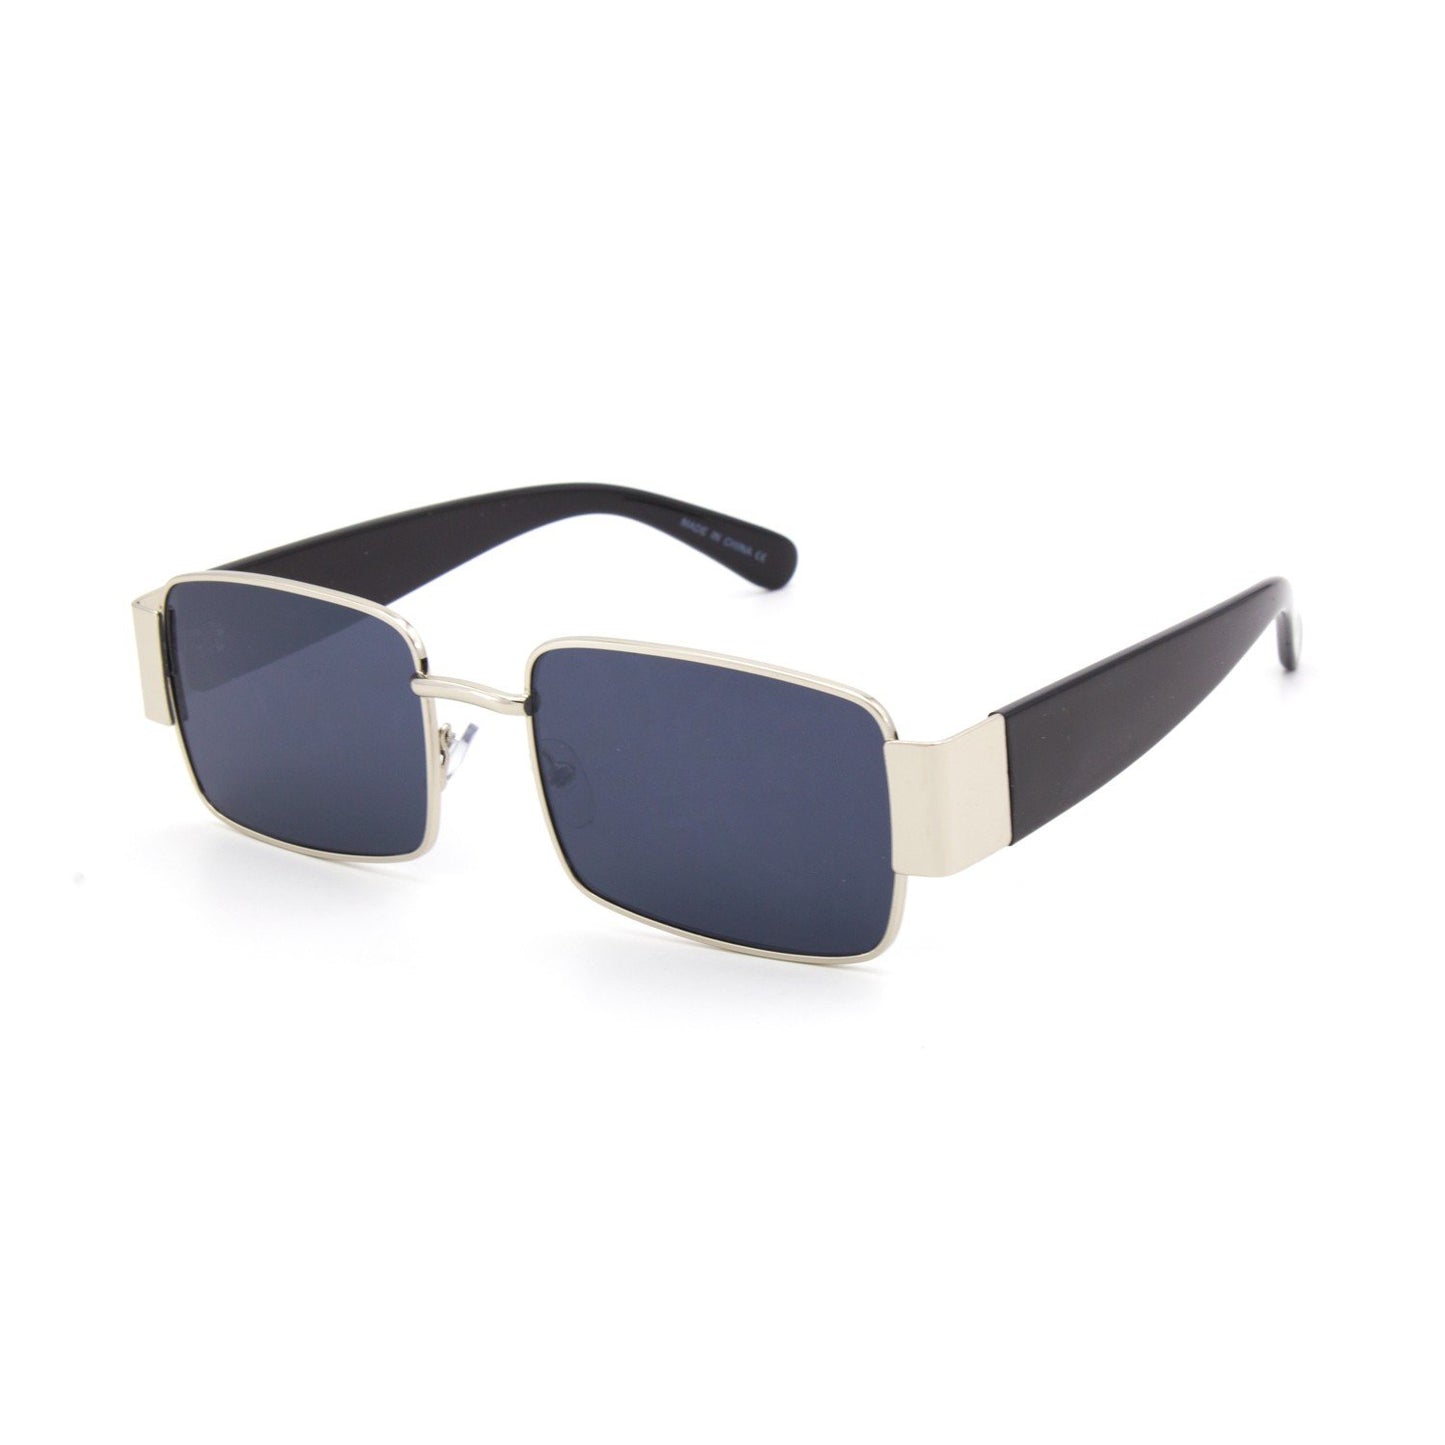 "Basic Essential" Metal Sunglasses - Weekend Shade Sunglasses